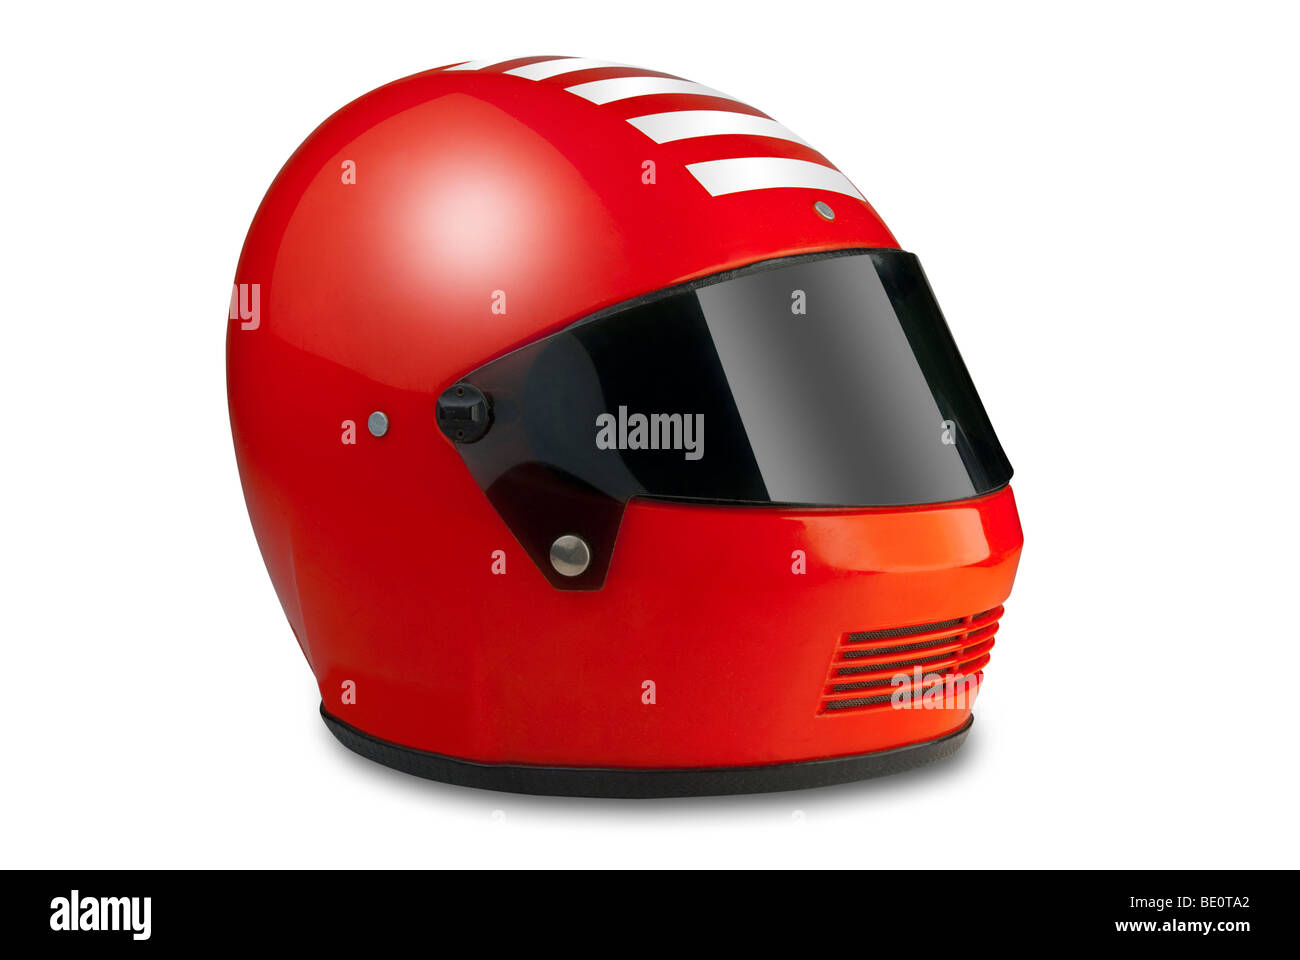 Motor sport racing casque rouge Banque D'Images